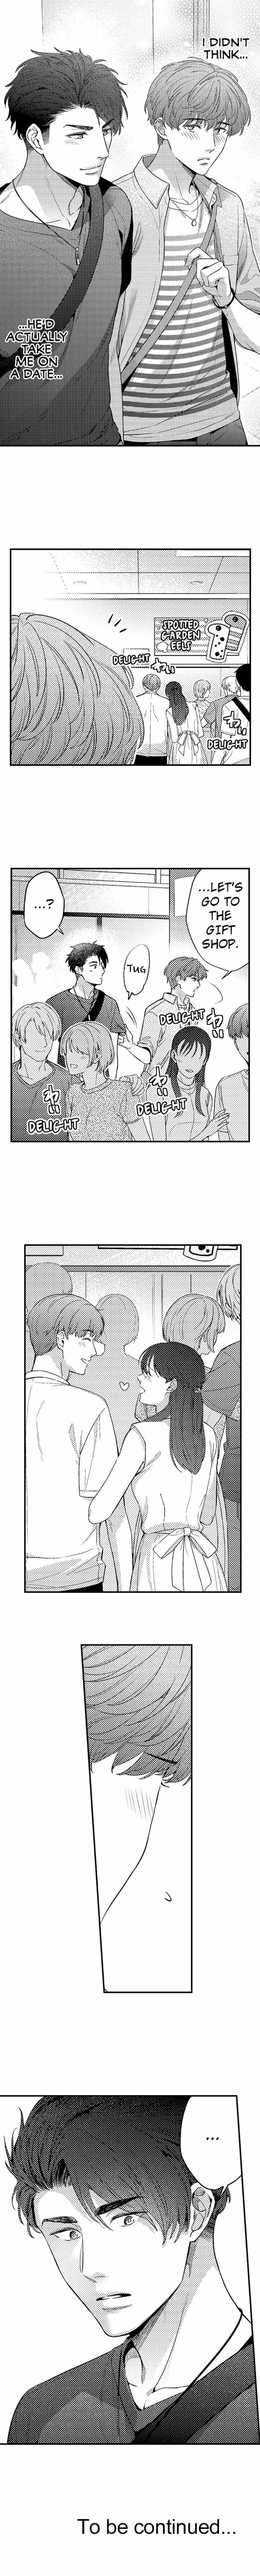 Tomodachi Engagement - Page 4